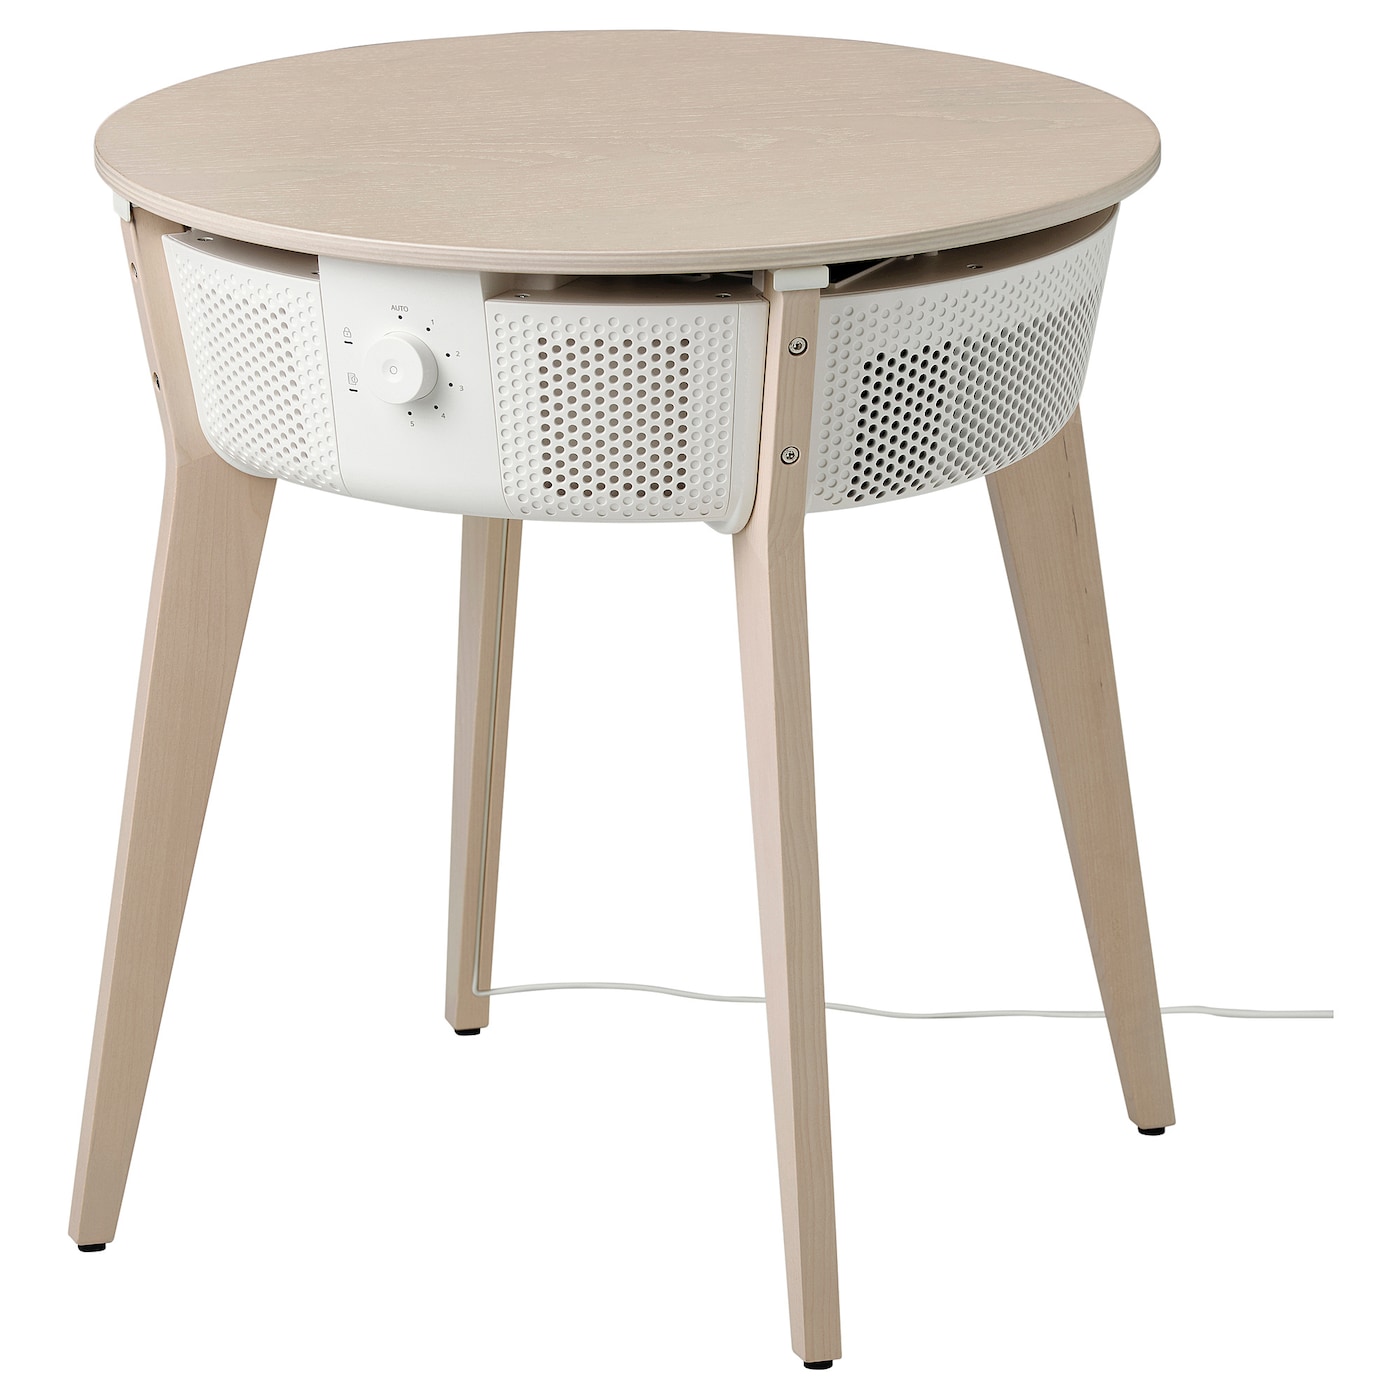 Стол с очистителем воздуха - IKEA STARKVIND, 54х55 см, белый, СТАРКВИНД ИКЕА